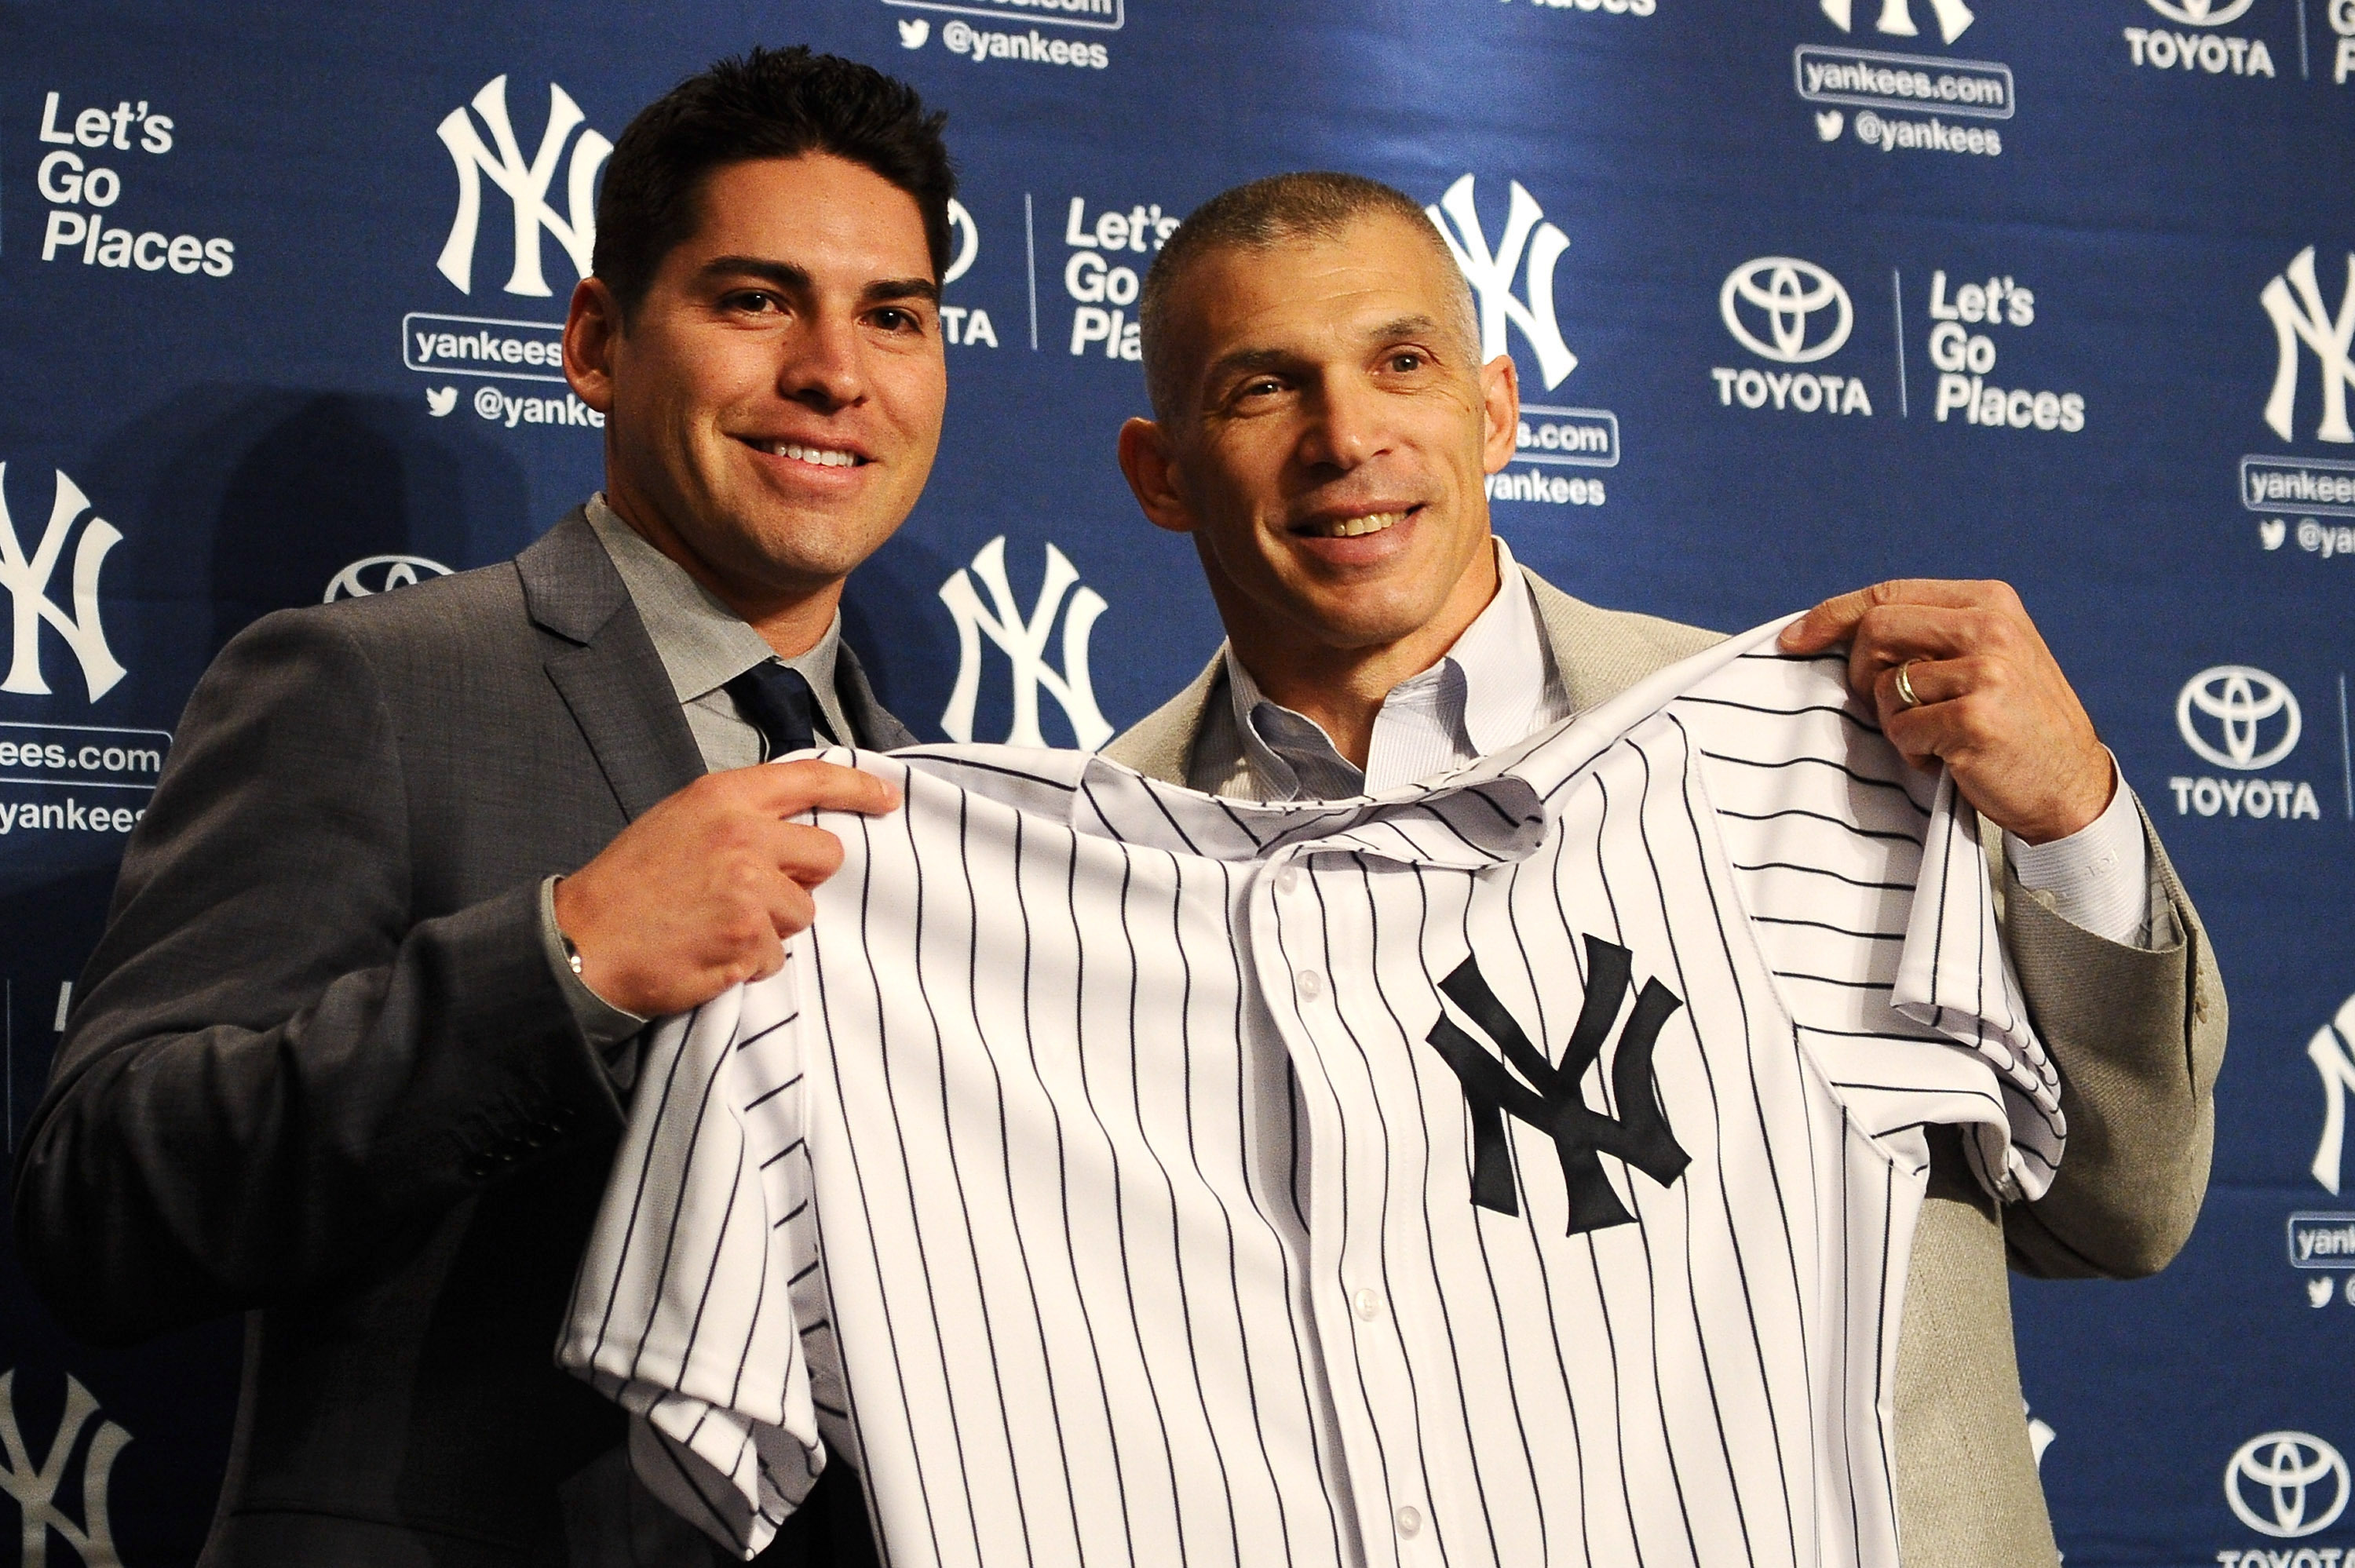 New York Yankees Team Jersey Cutting Board